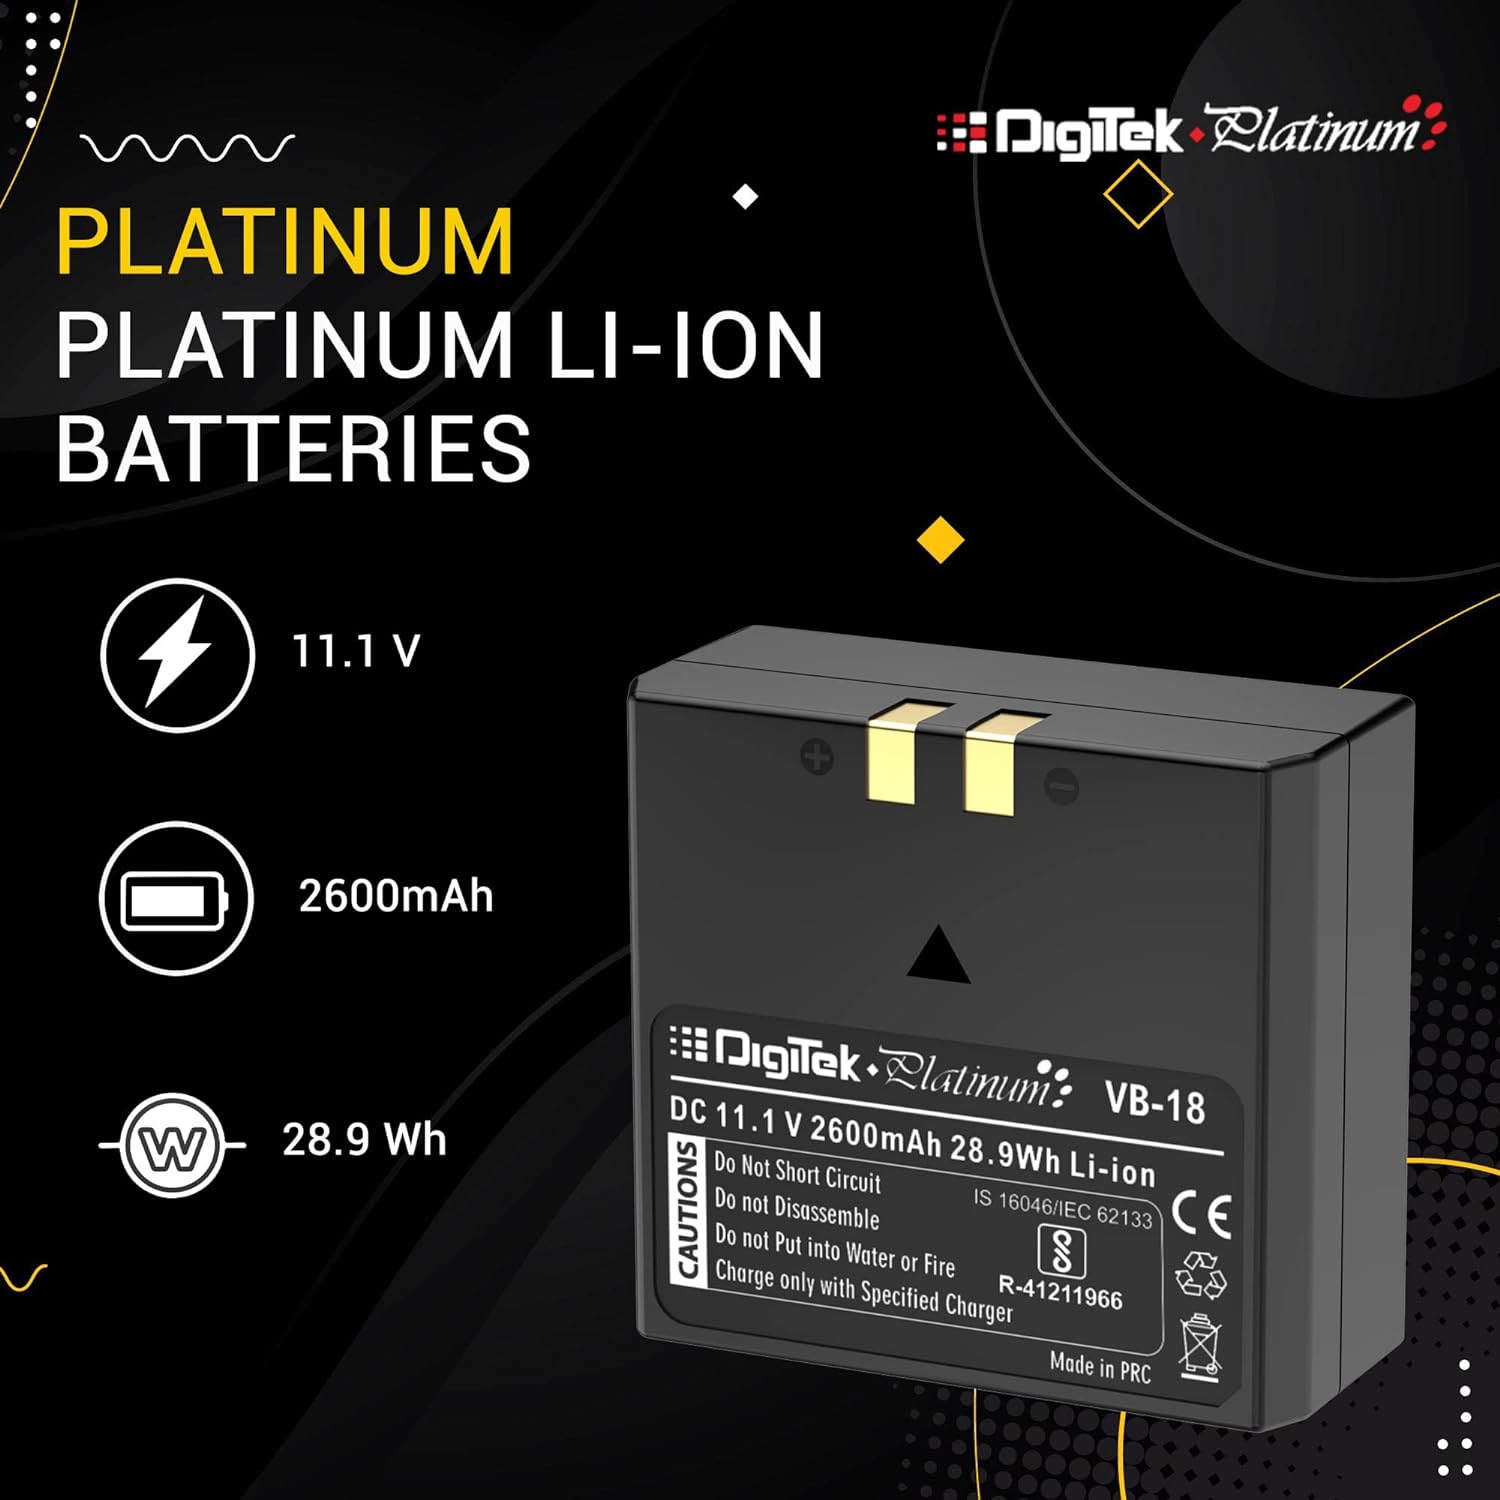 Digitek (PlatinumVB-18) Battery for Godox Flash